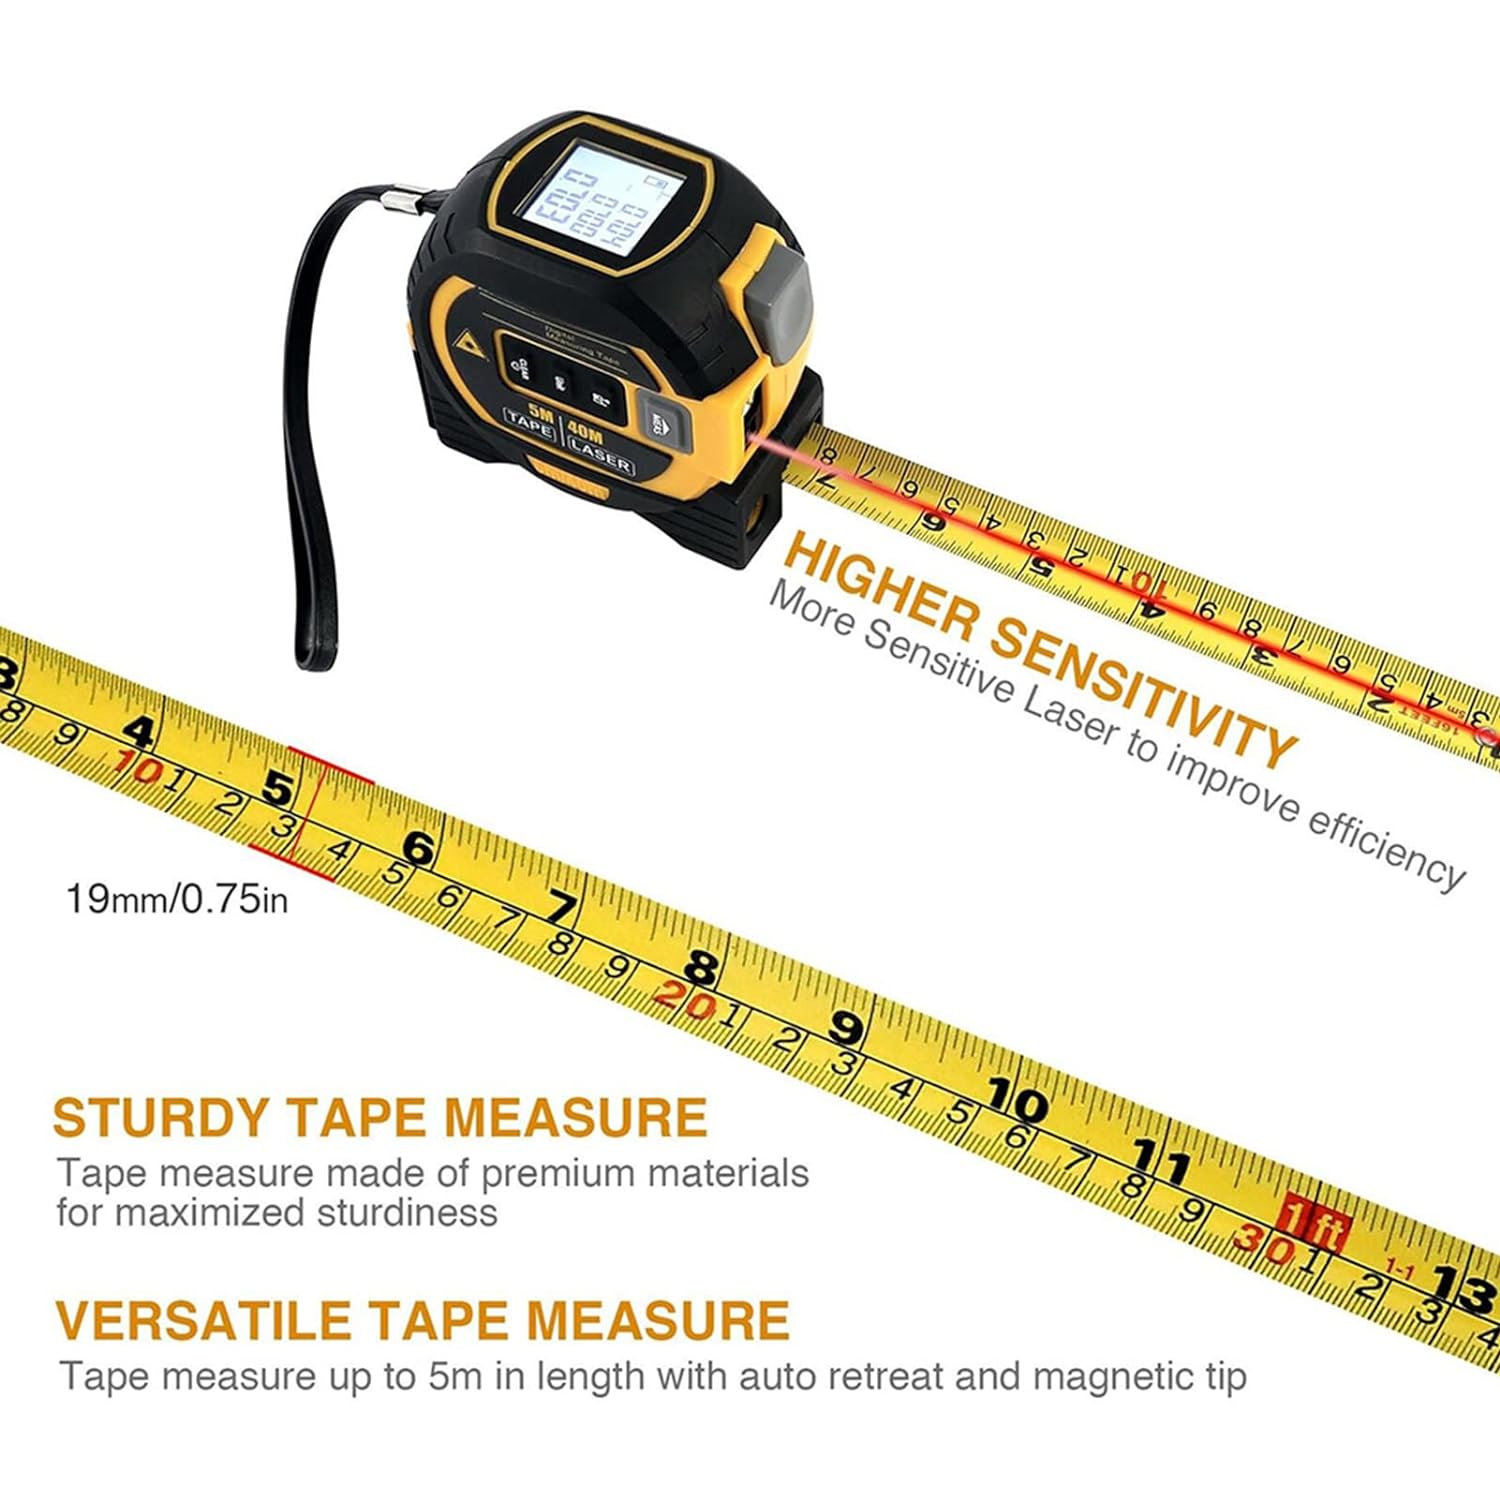 UFOM Tape Measure, 3 in 1 Digital Distance Meters with LCD Display, 40M Measure, 5M Tape Measure, Vertical Cross Line, Measuring Area/Volume/Distance Tool